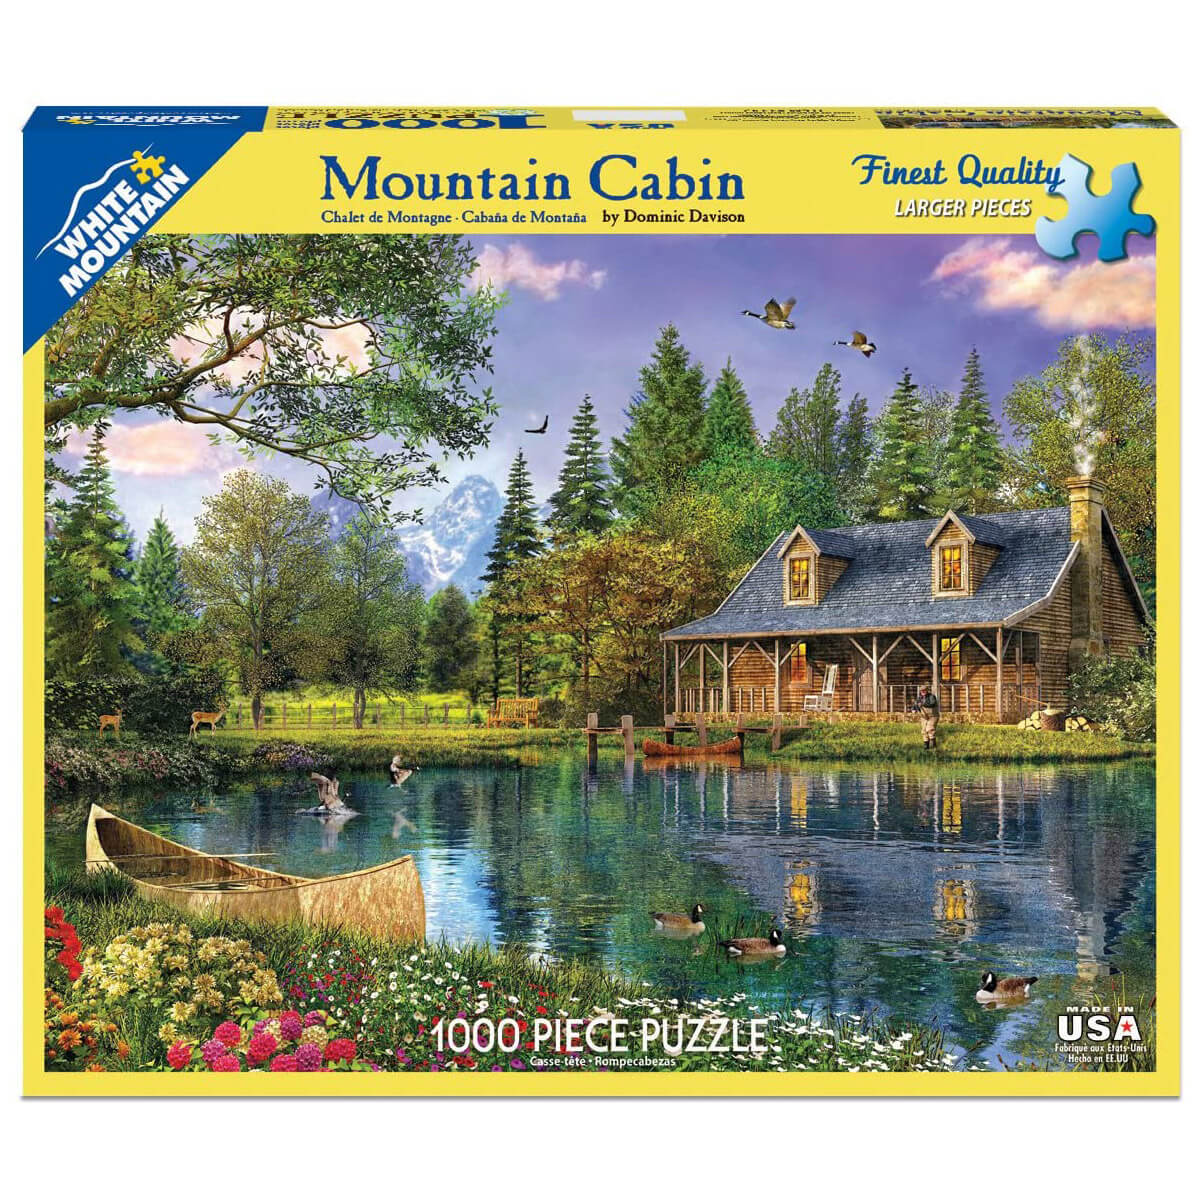 White Mountain Puzzles Mountain Cabin 1000 Piece Jigsaw Puzzle